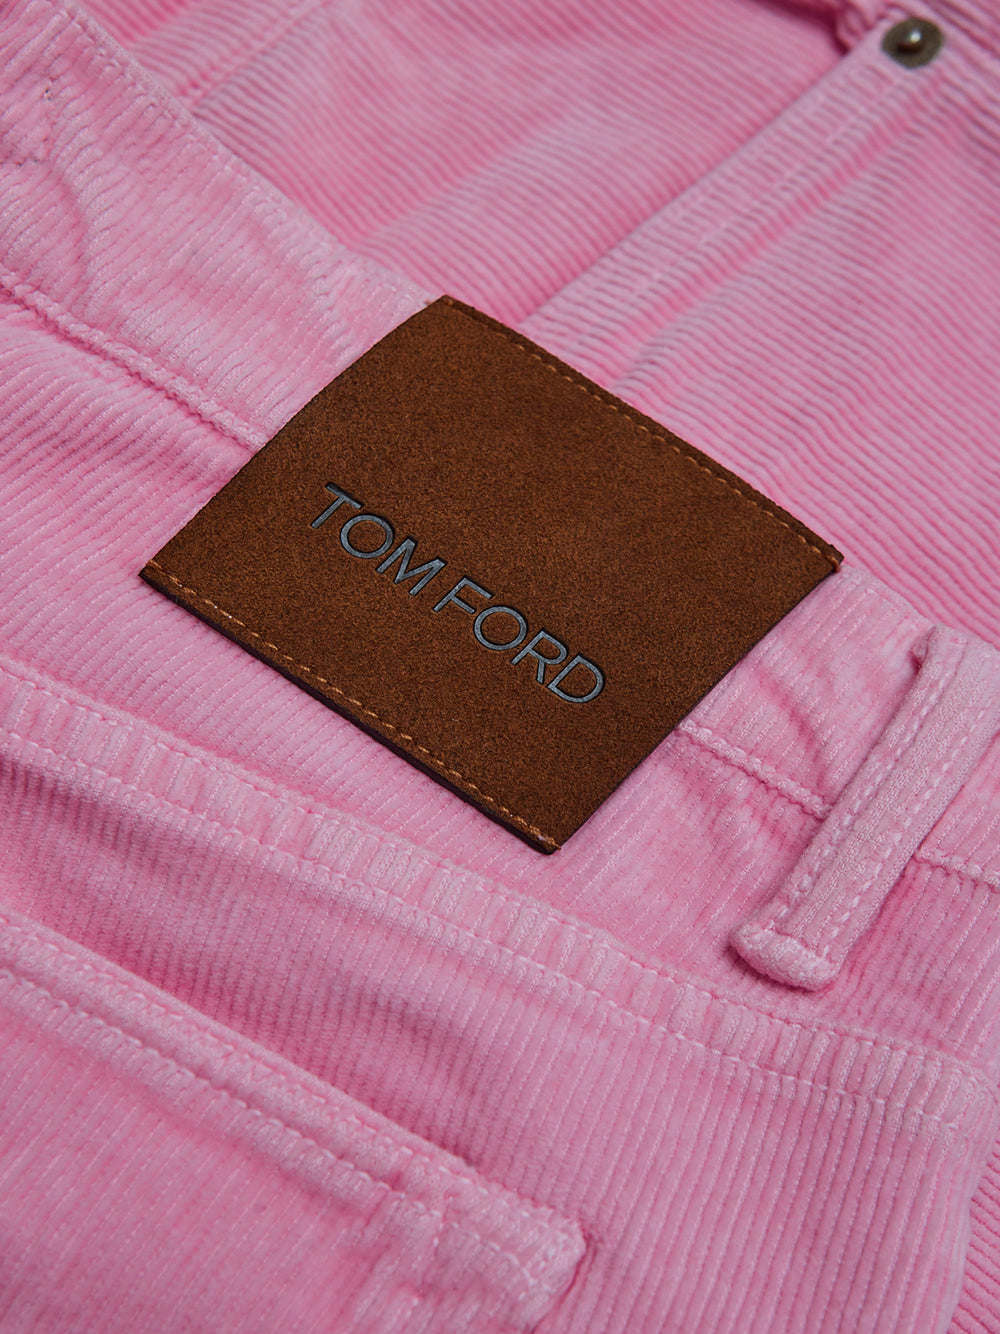 Pantalones de cinco bolsillos de terciopelo rosa de Tom Ford